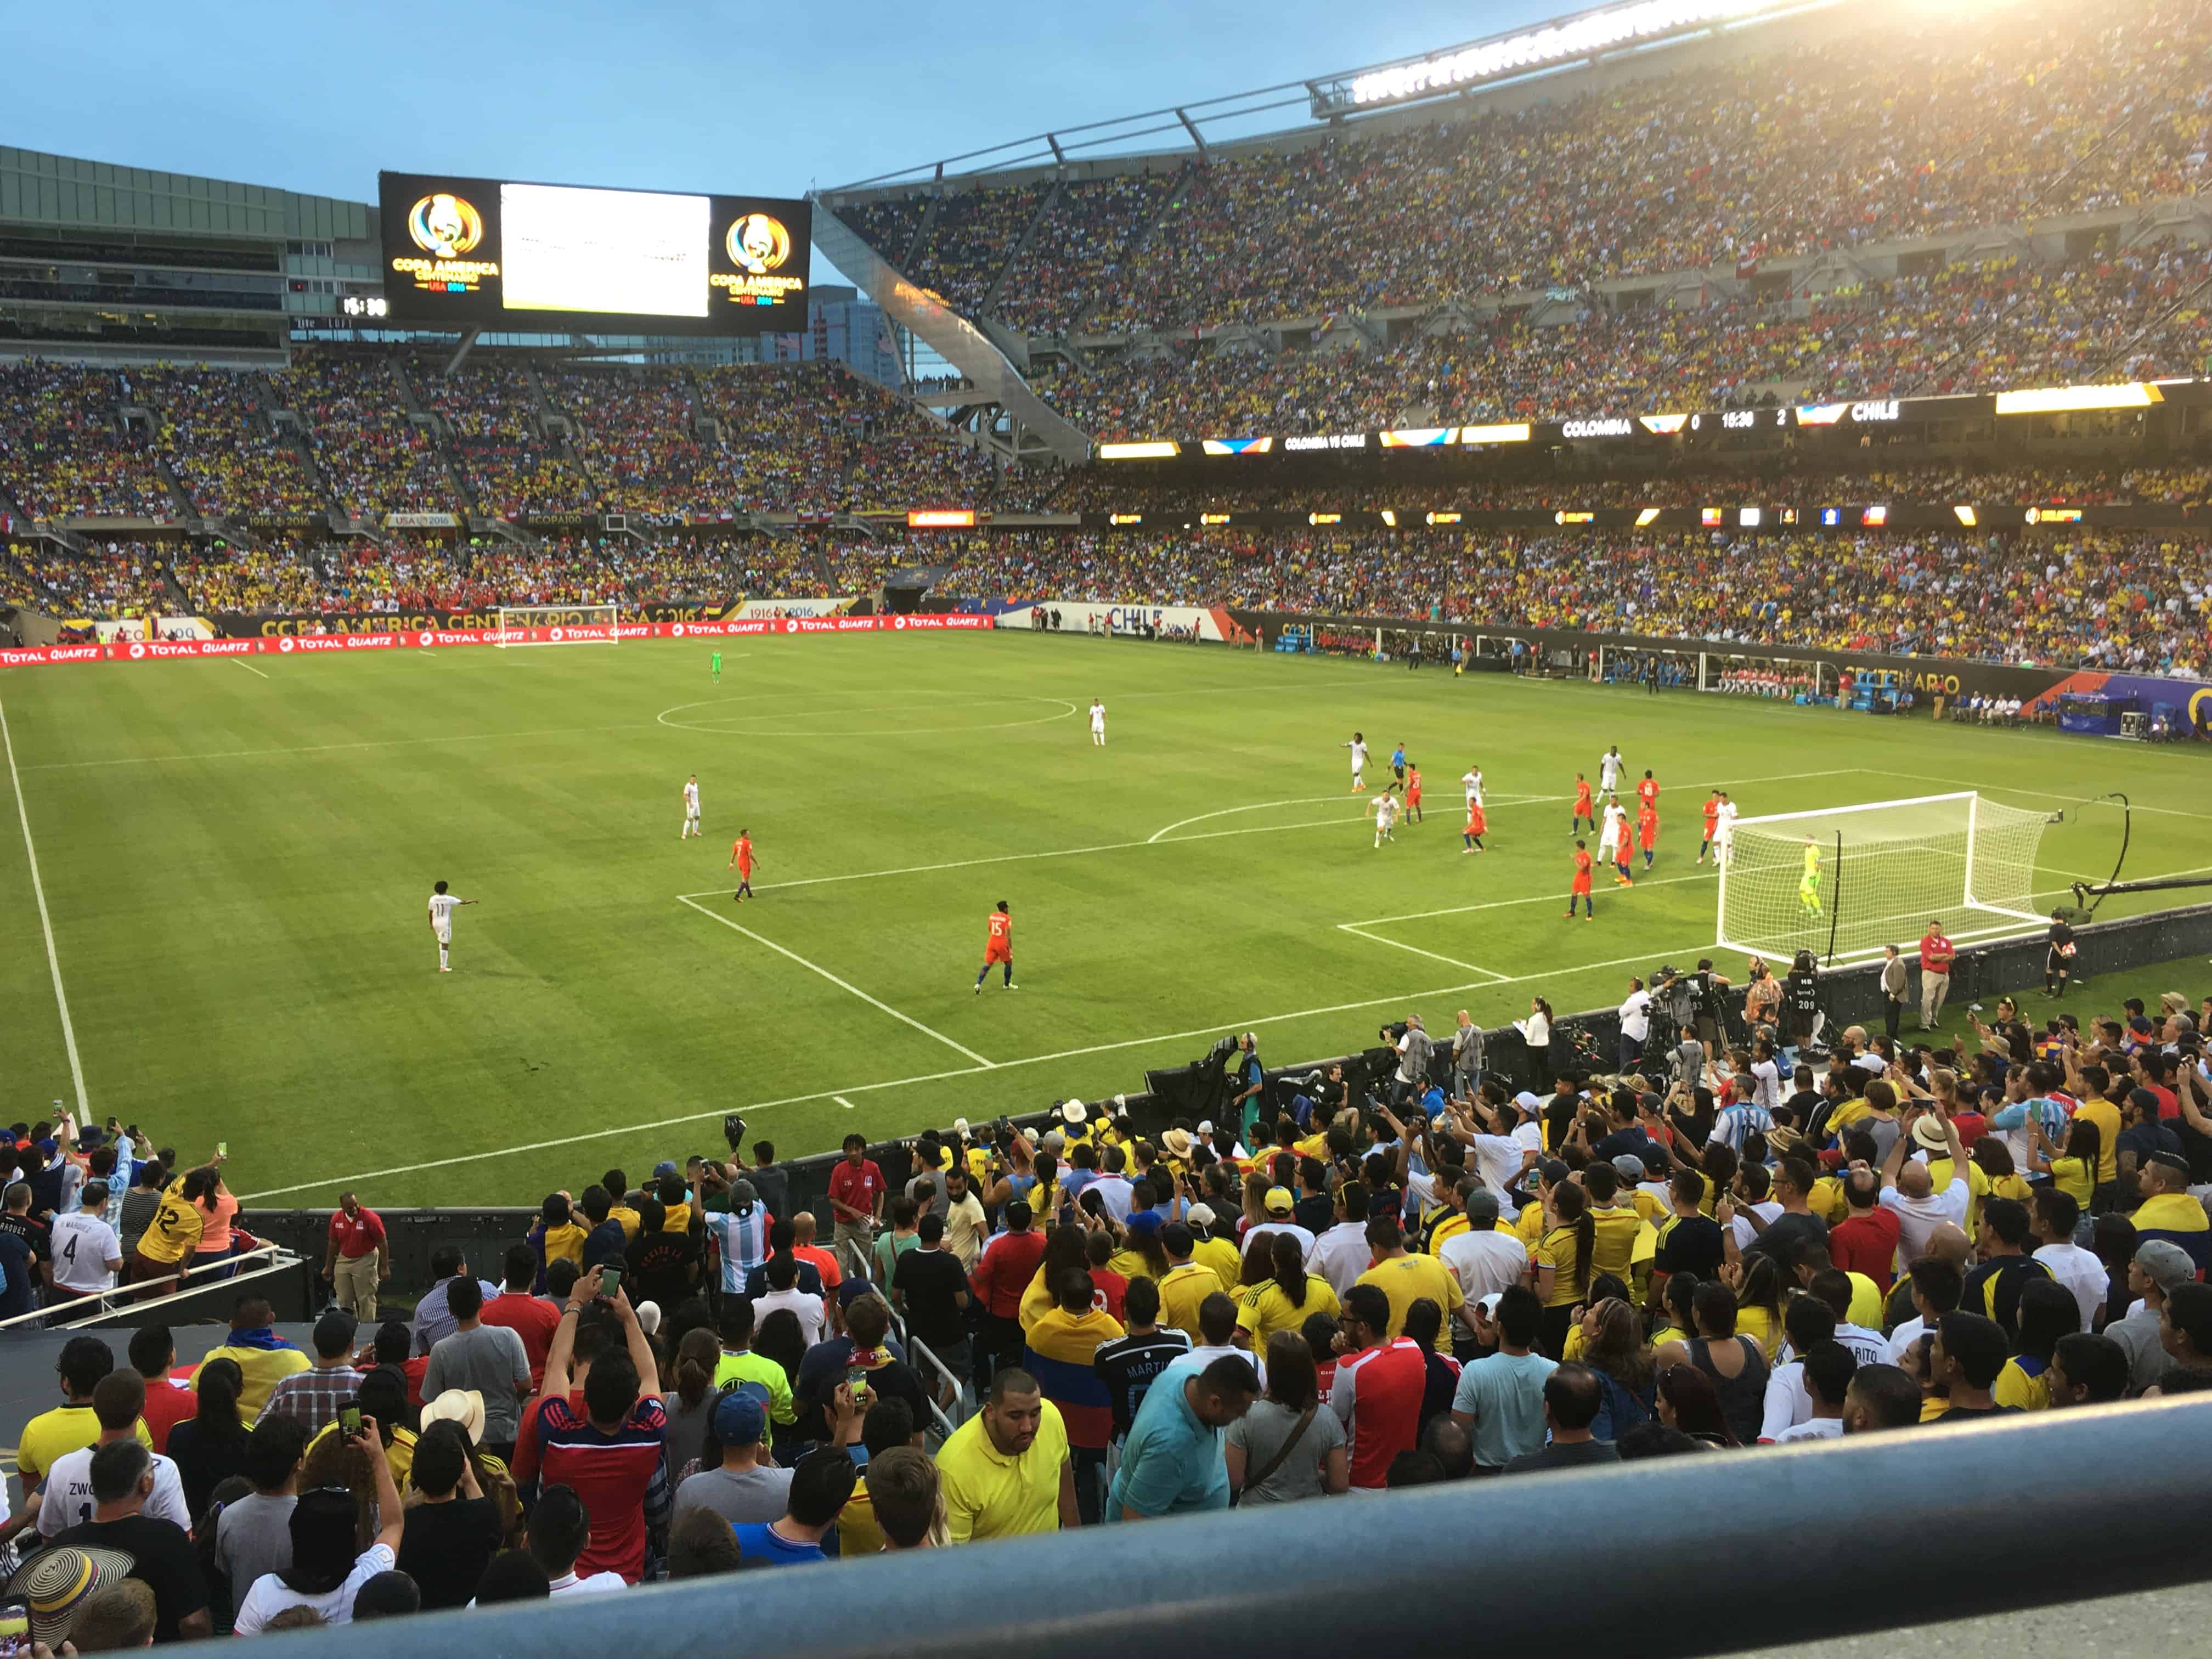 Colombia vs Chile at Copa América Centenario USA 2016 at Soldier Field in Chicago, Illinois